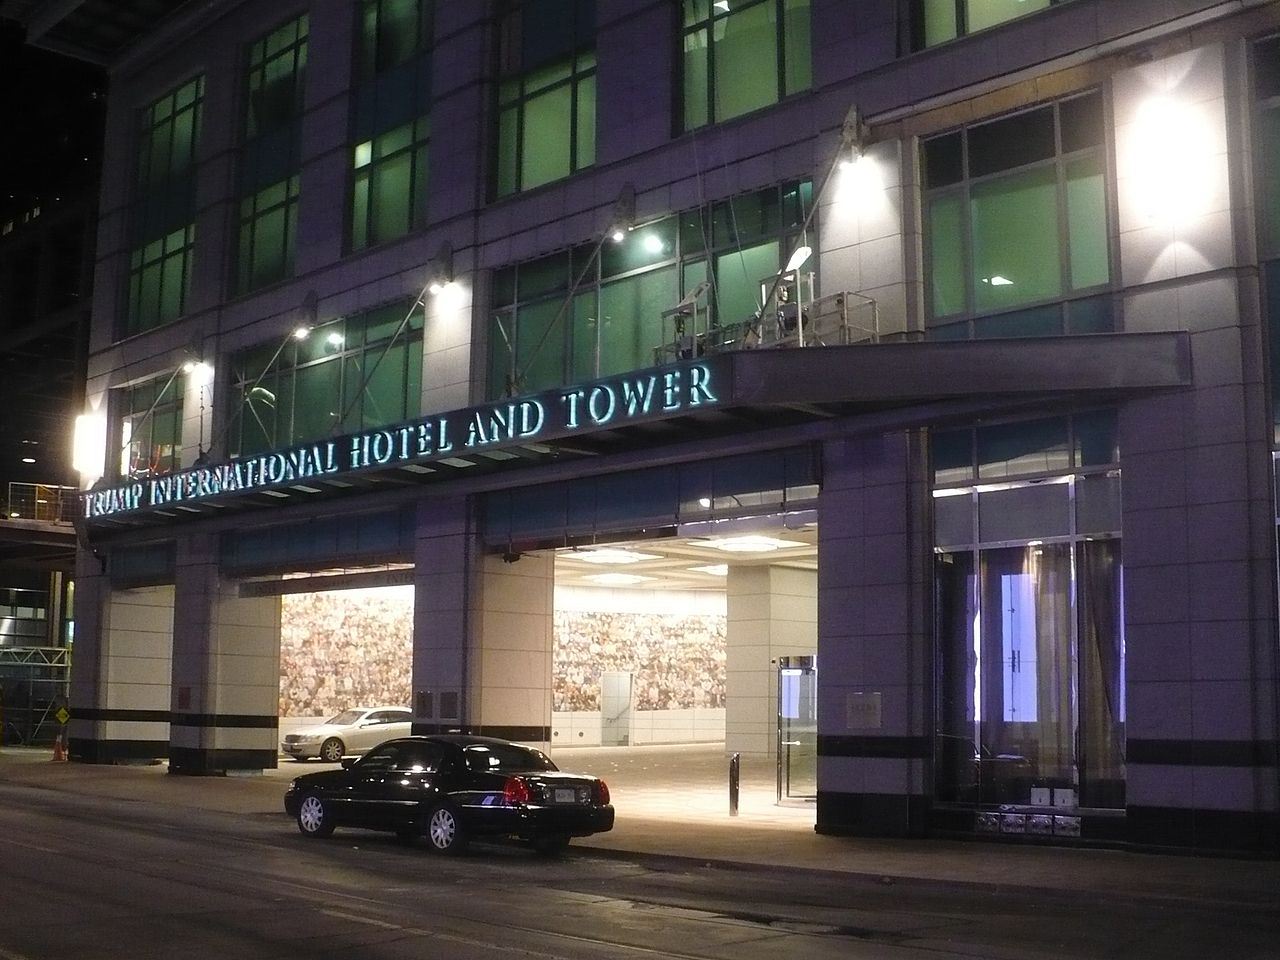 Toronto Hotel To Drop Trump Name